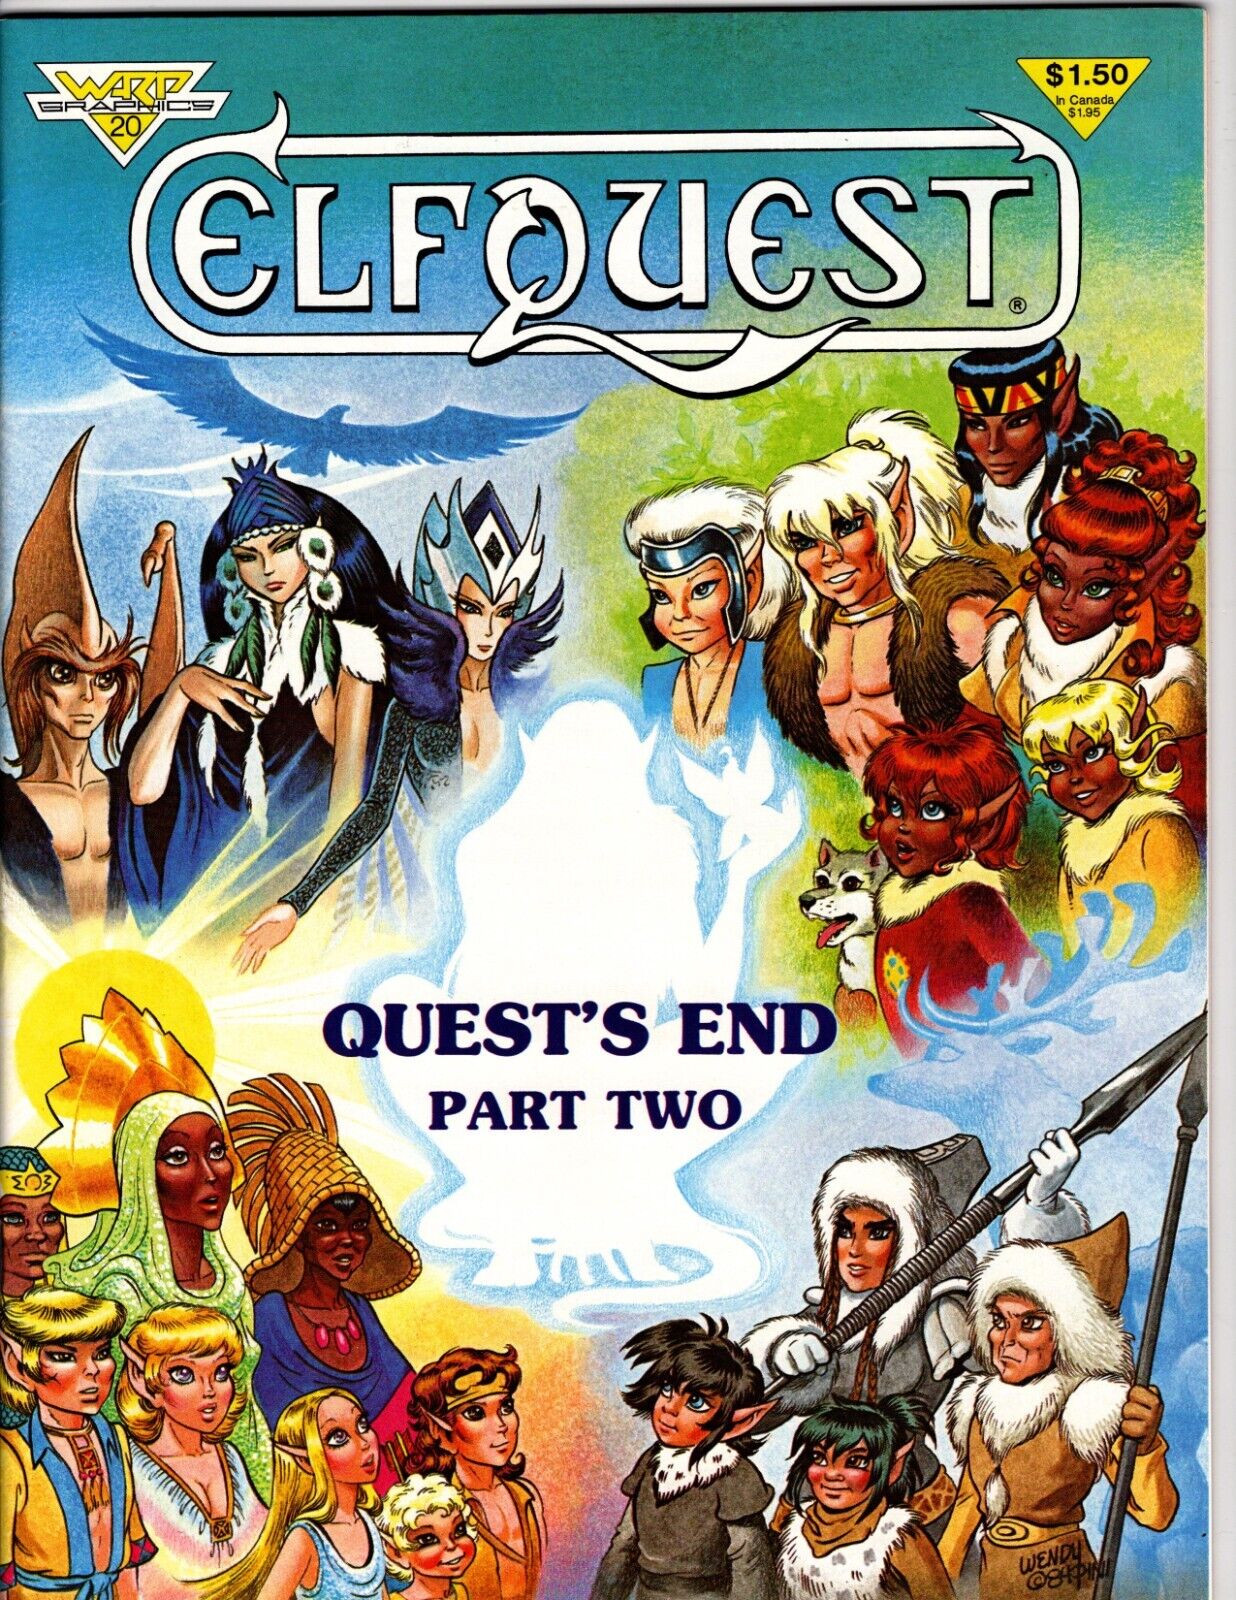 Elfquest #20 Large Format Comic Warp Graphics, 1984 by Wendy & Richard Pini NM-